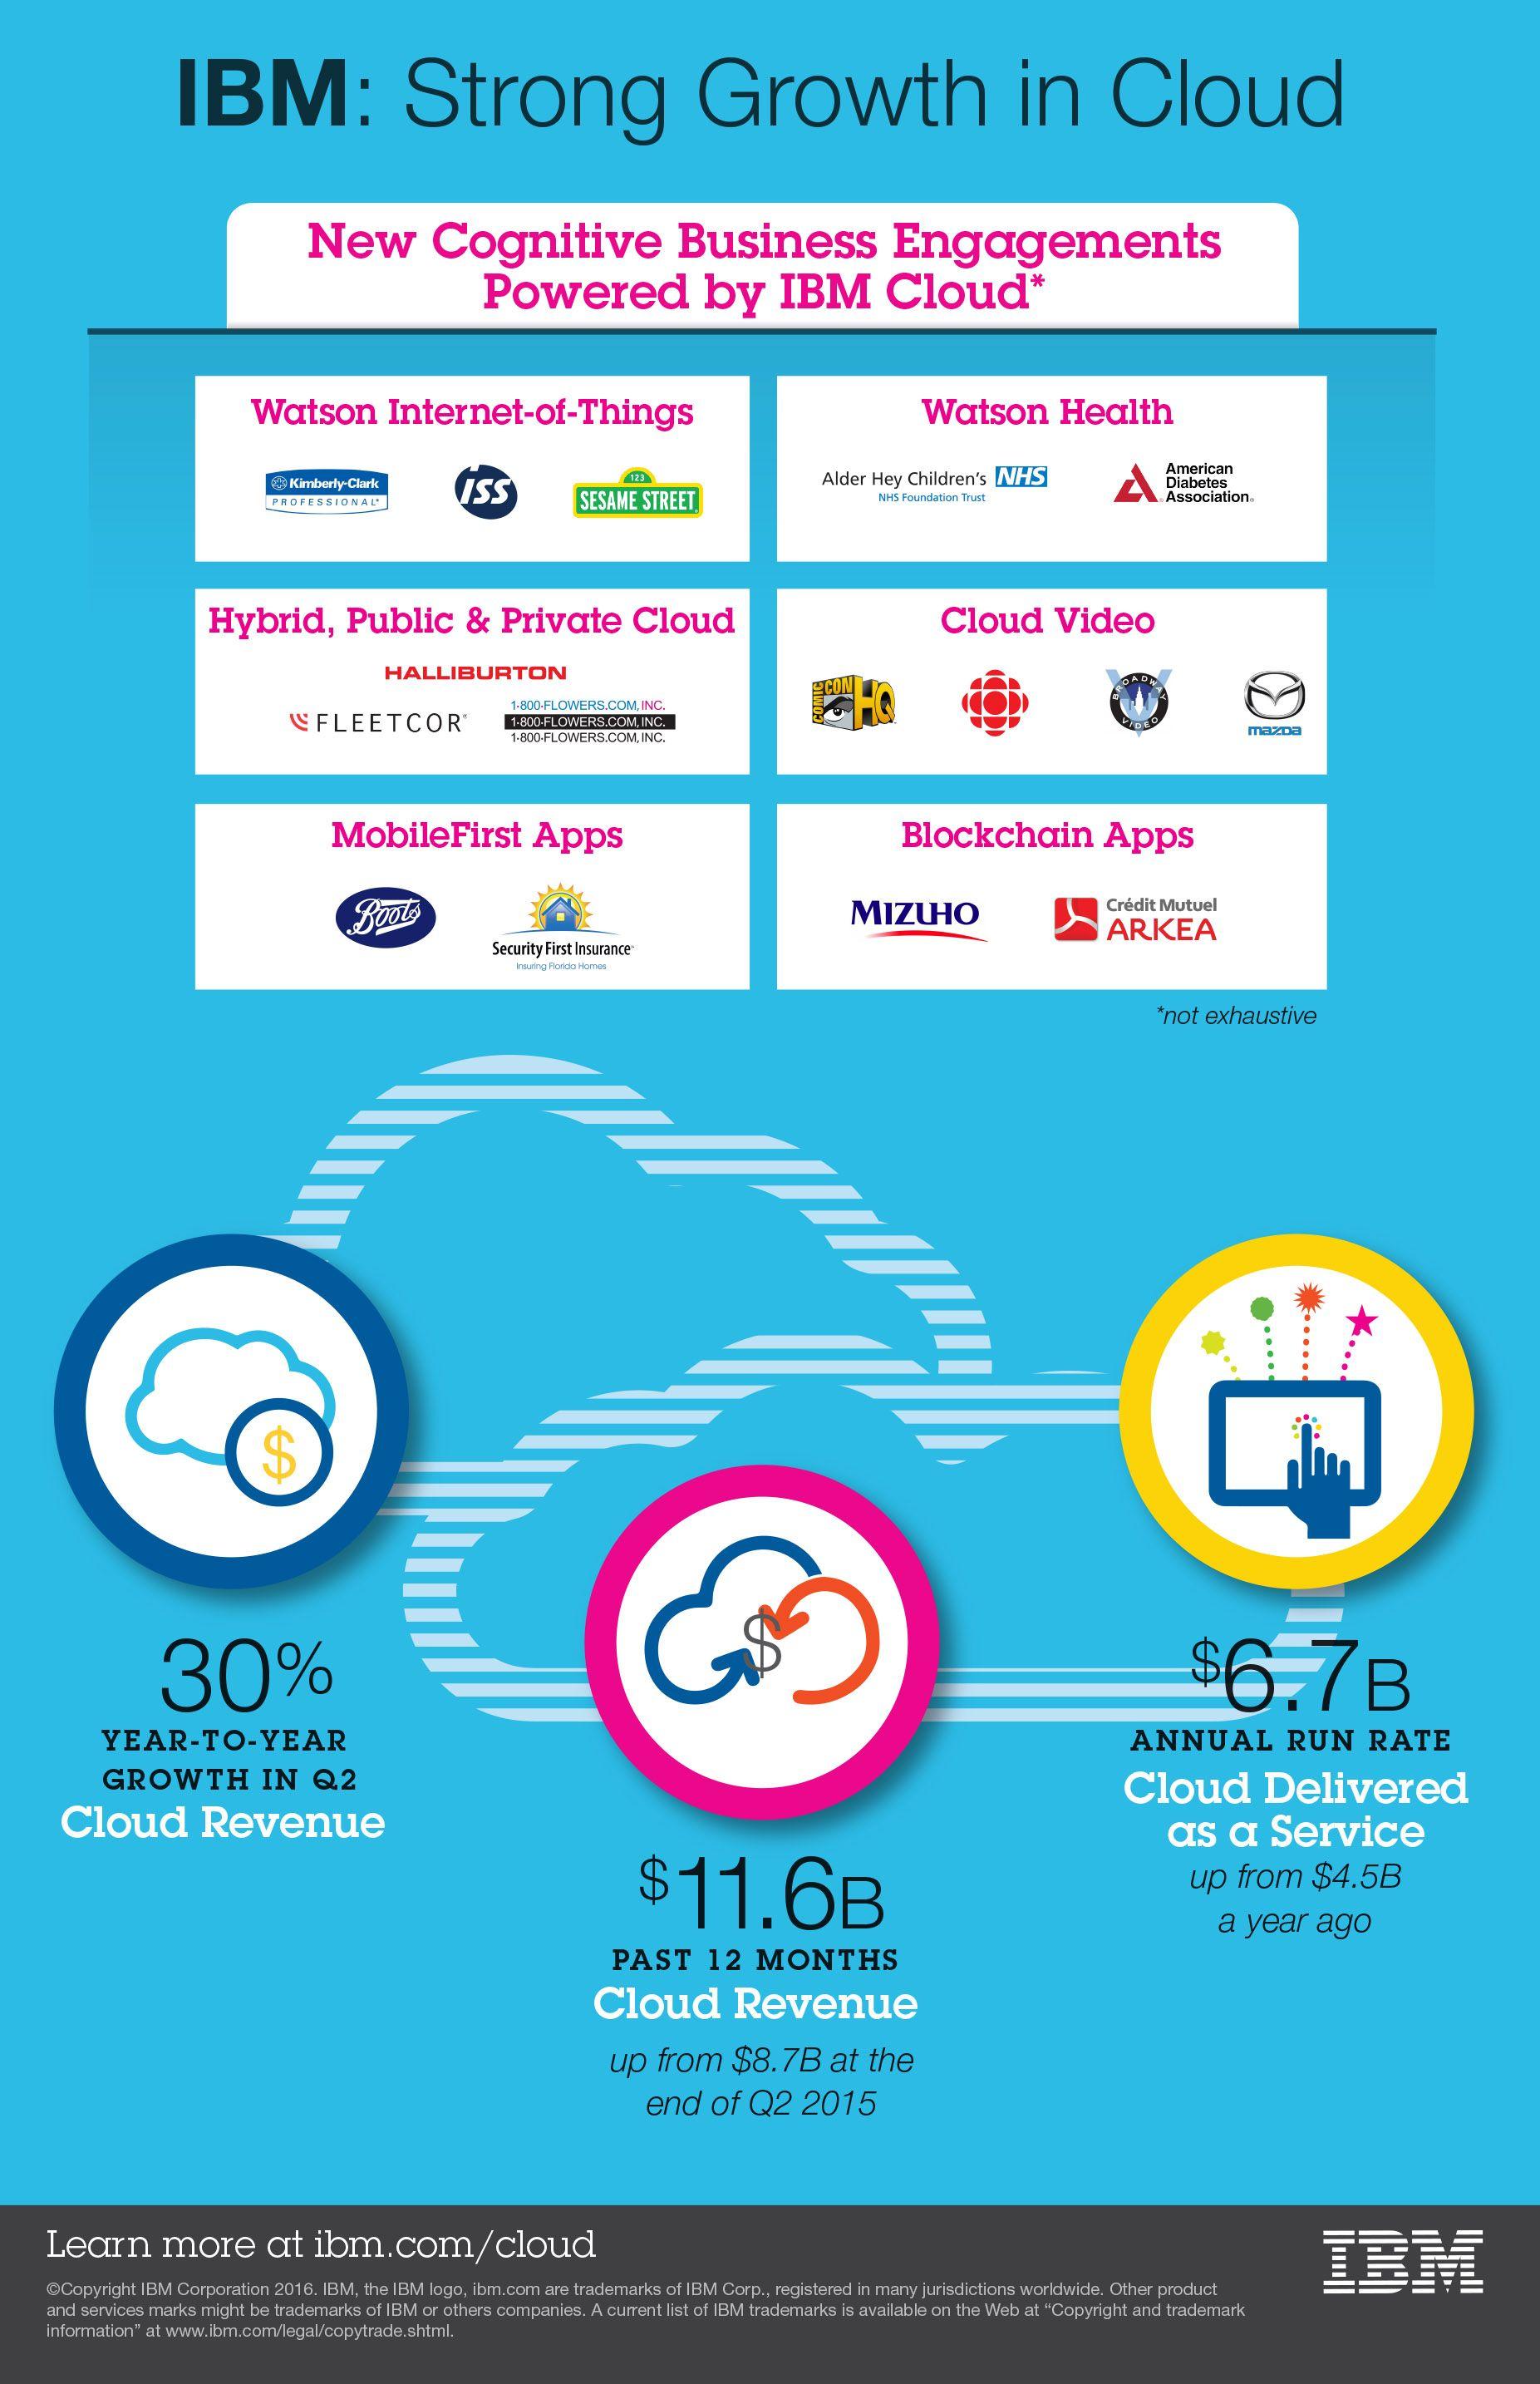 IBM Cloud Computing Logo - IBM reports strong growth in cloud - Cloud computing news